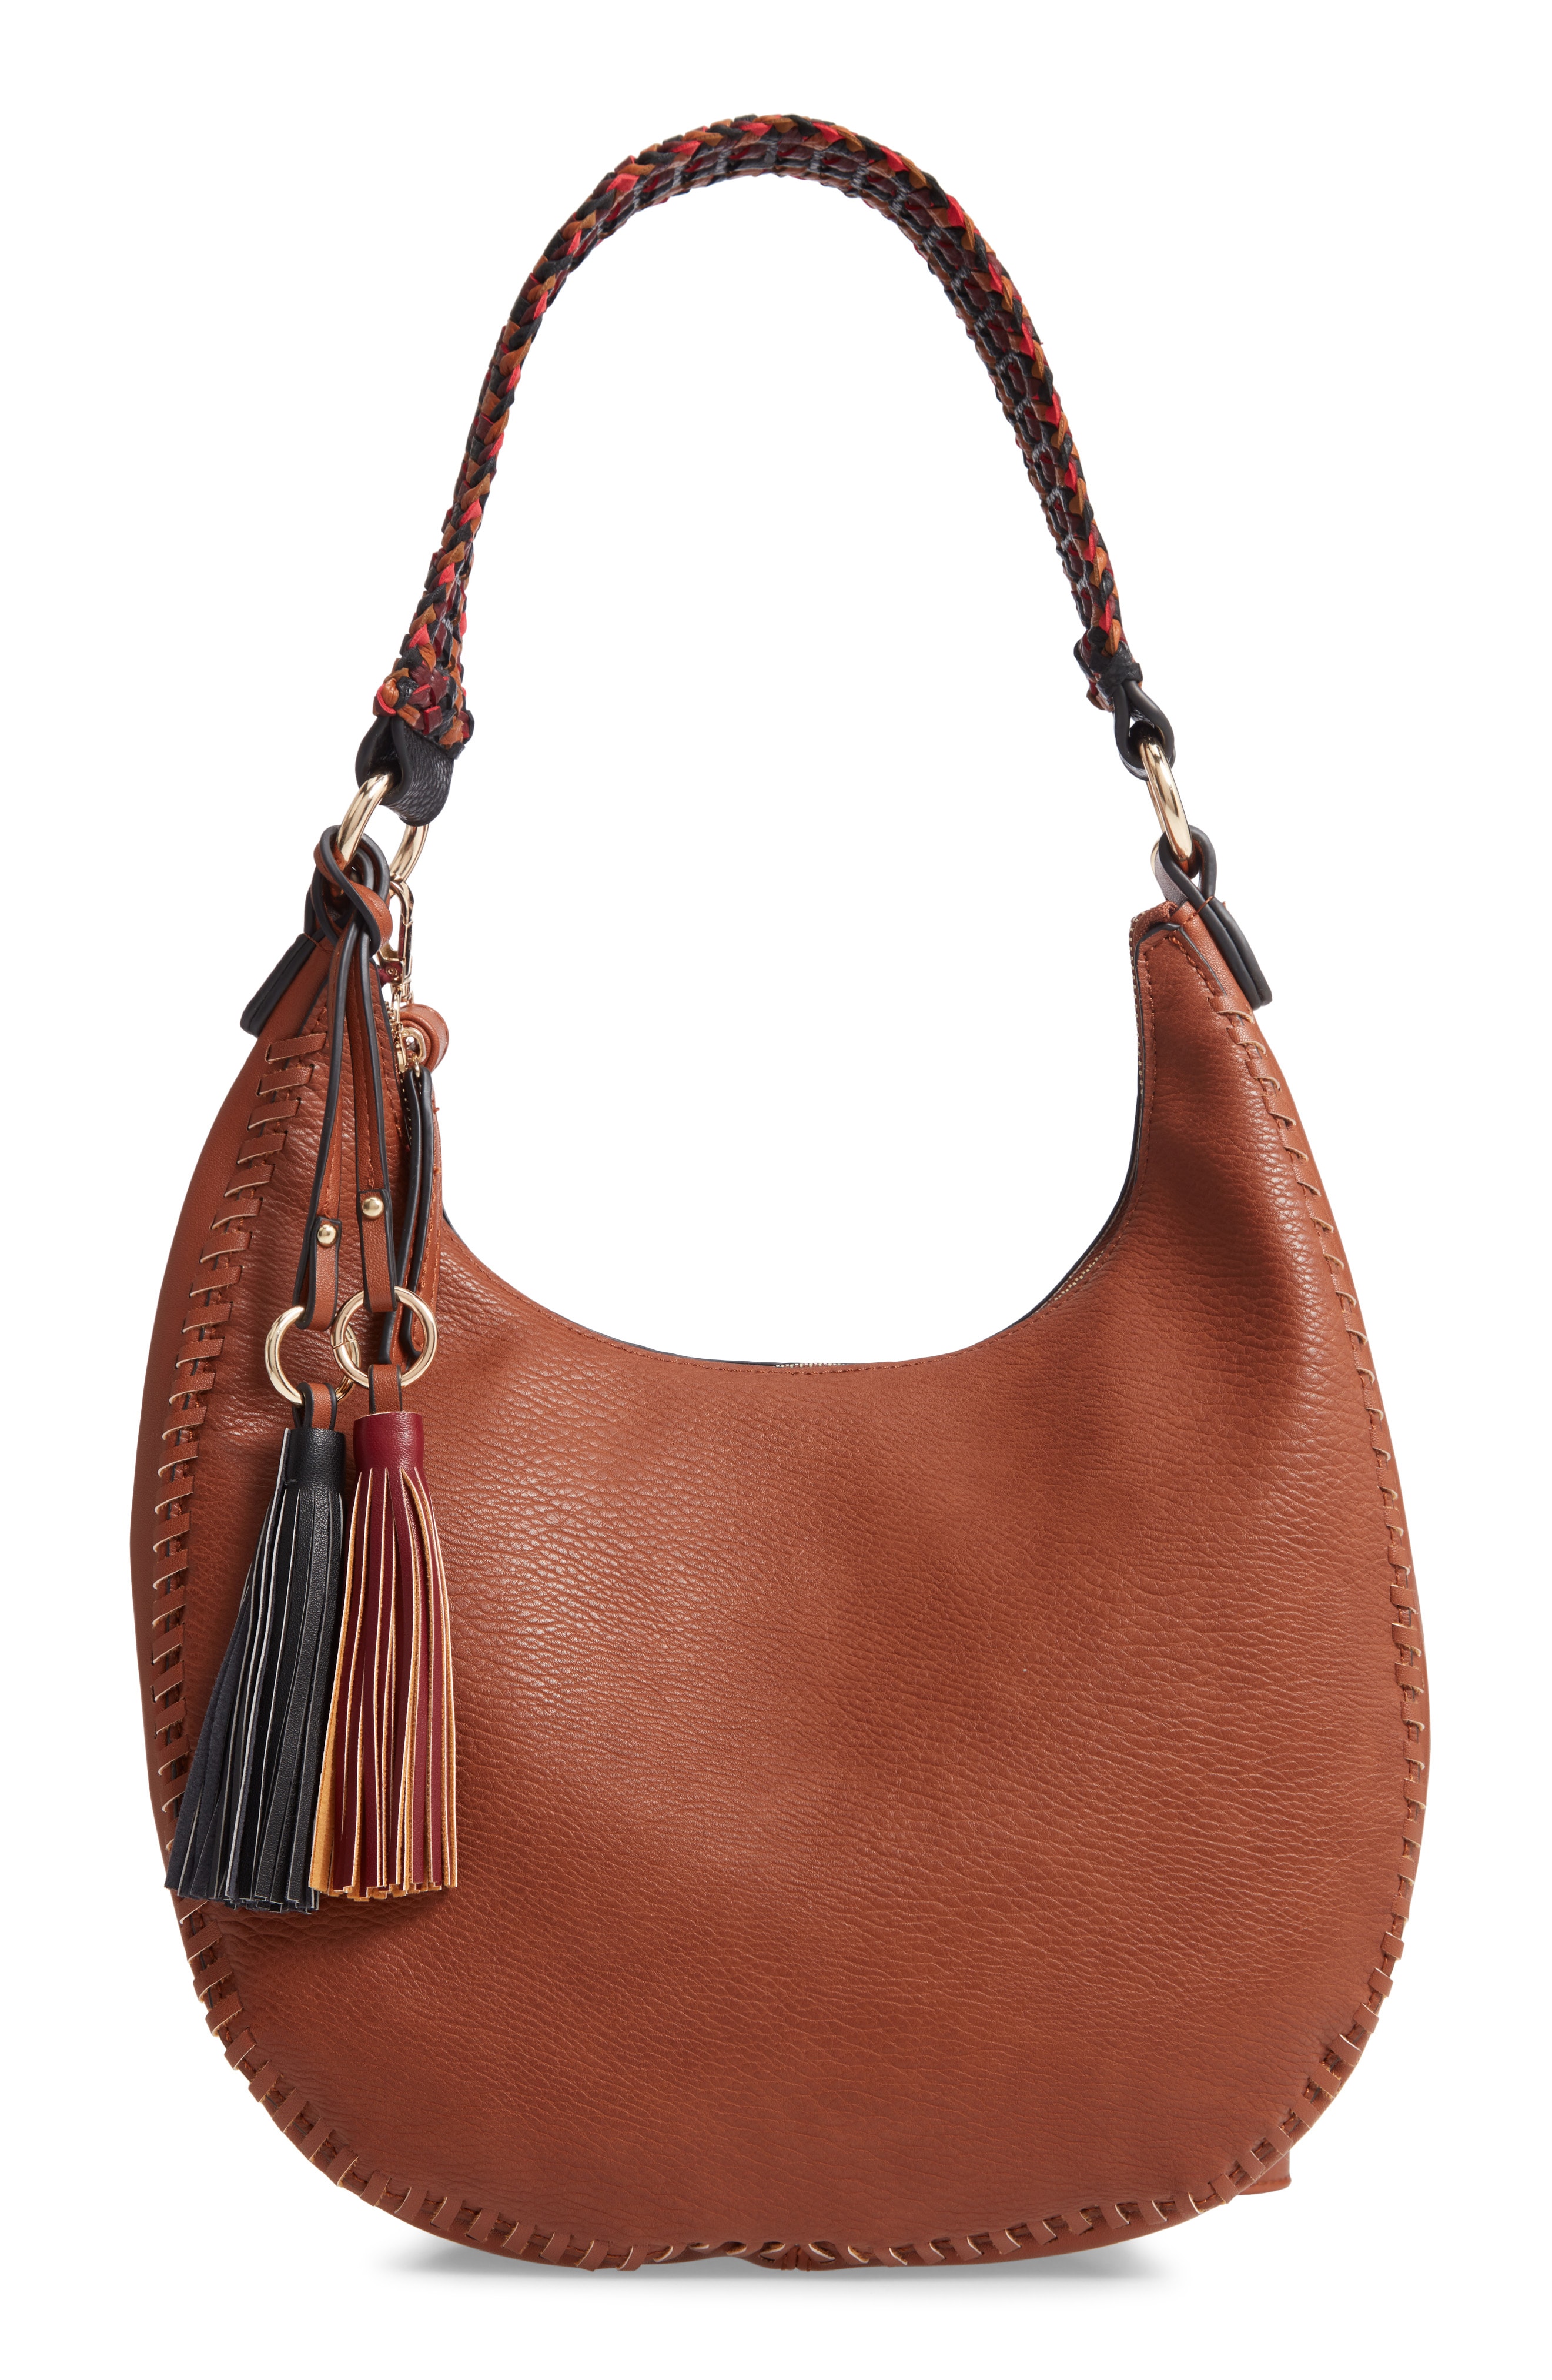 Women love leather hobo bags - thefashiontamer.com